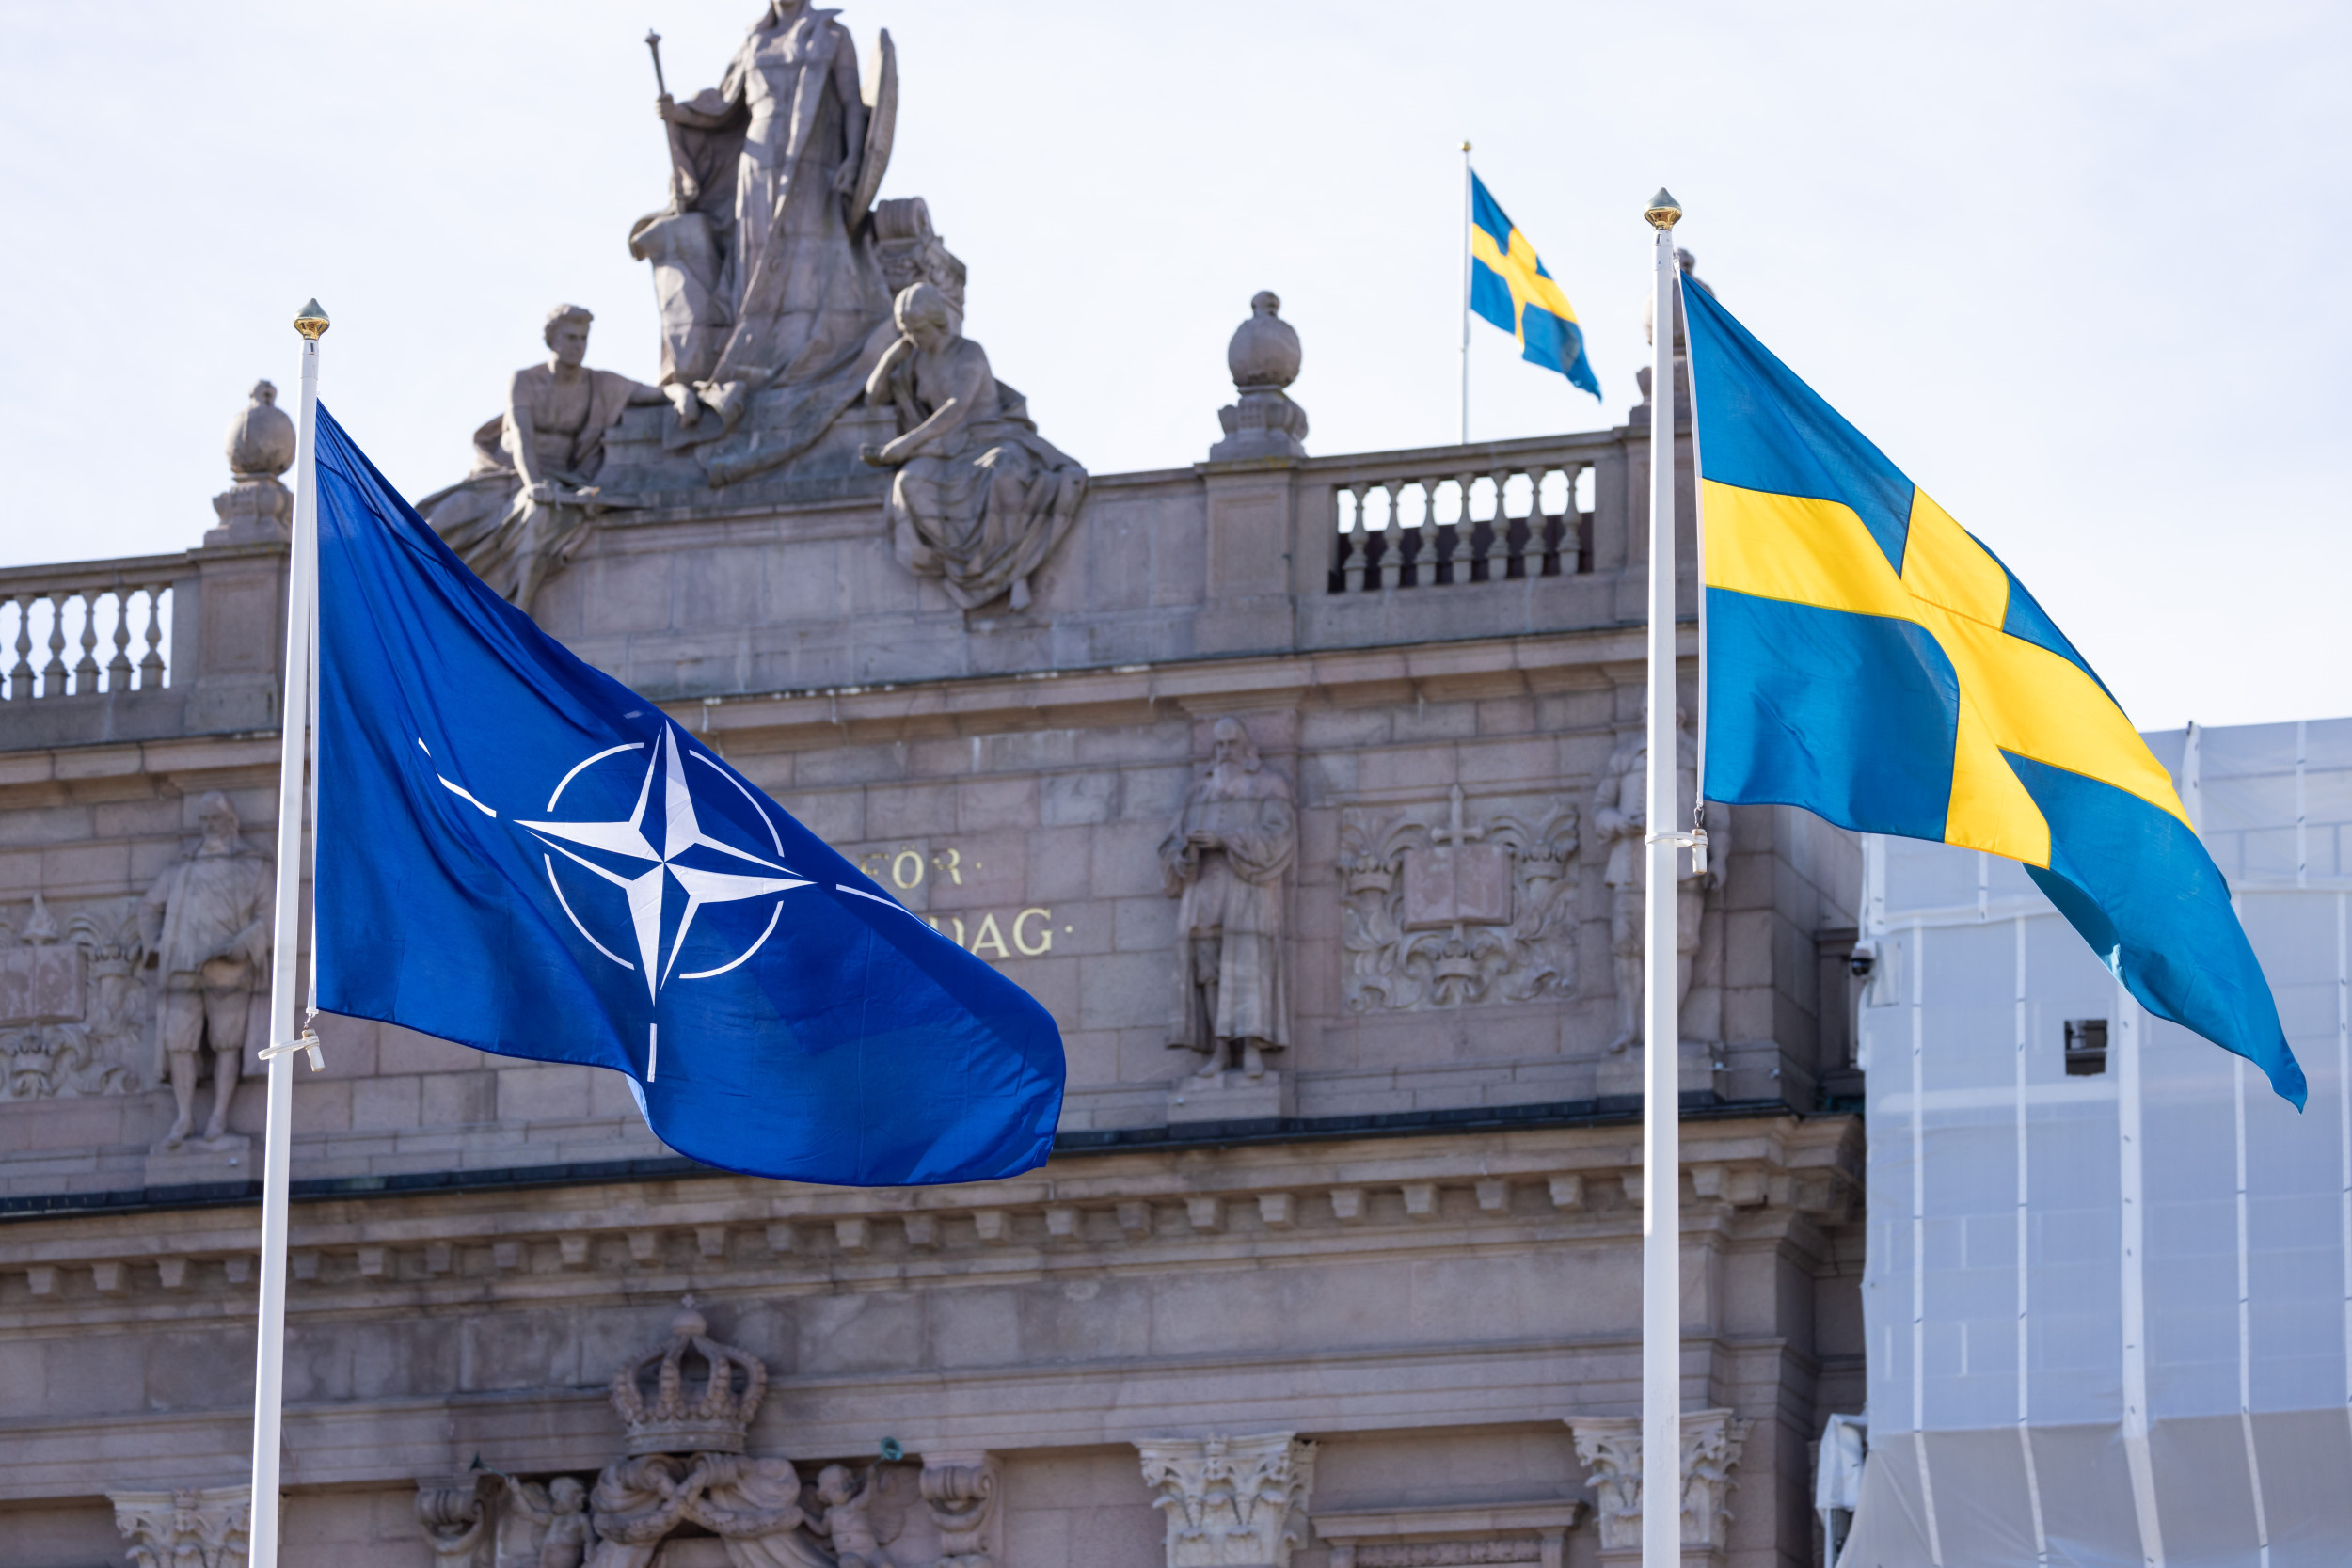 NATO and Sweden flag